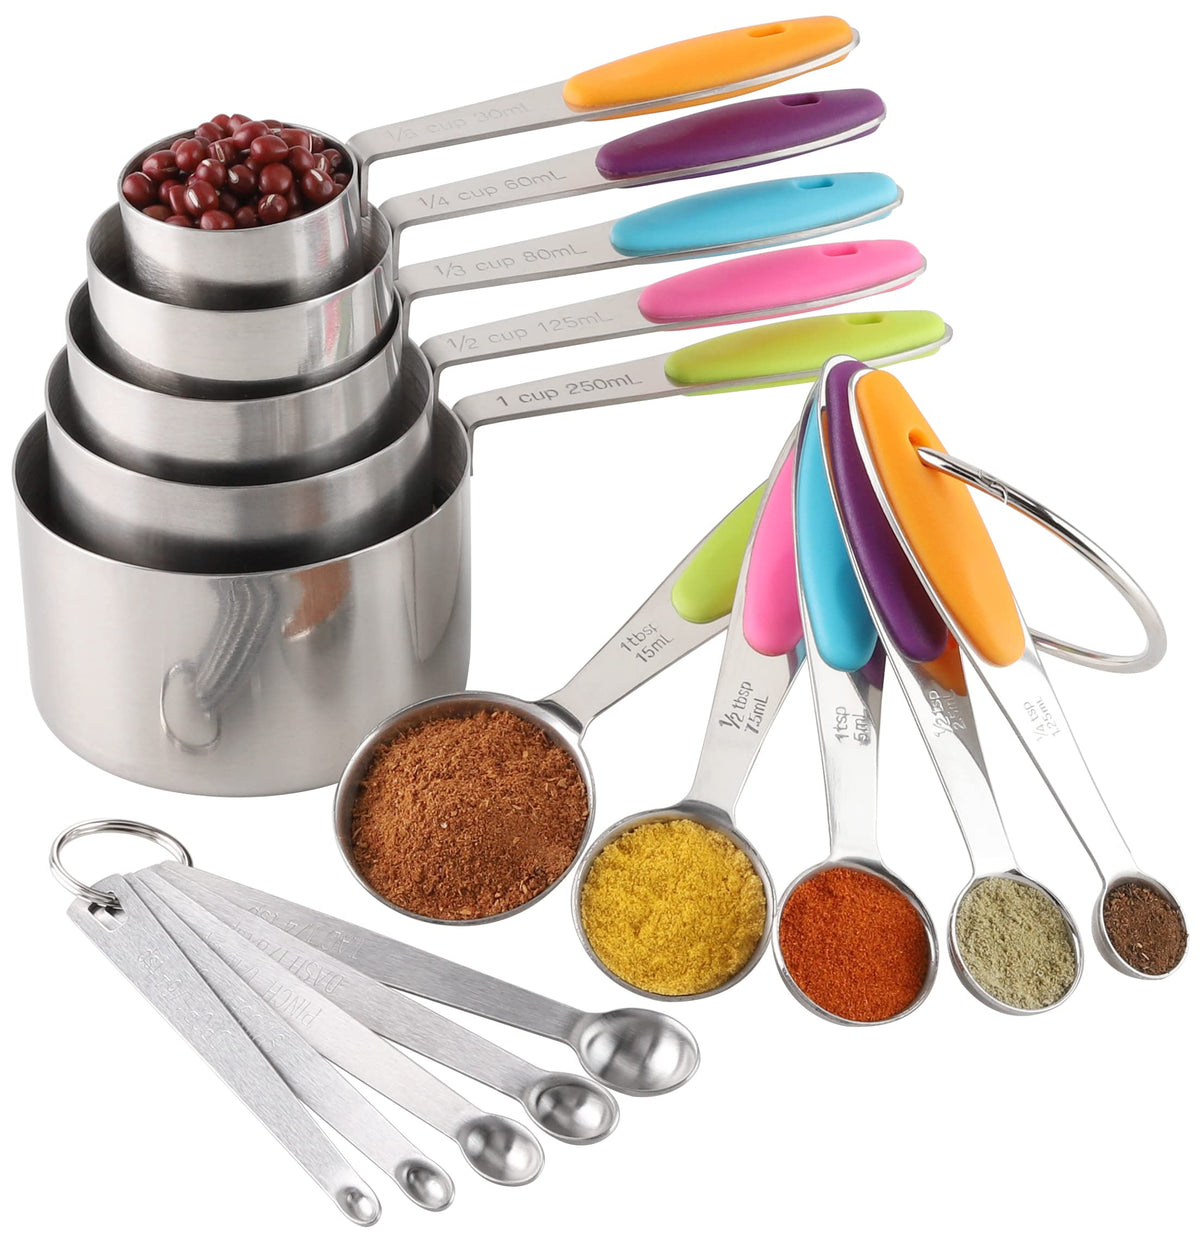 Measuring Spoons Set Of 5, Tiny Stainless Steel Measuring Spoons With  Silicone Handle, Small Measuring Spoon 1/64, 1/32, 1/16, 1/8, 1/4 Tsp,  Teaspoon